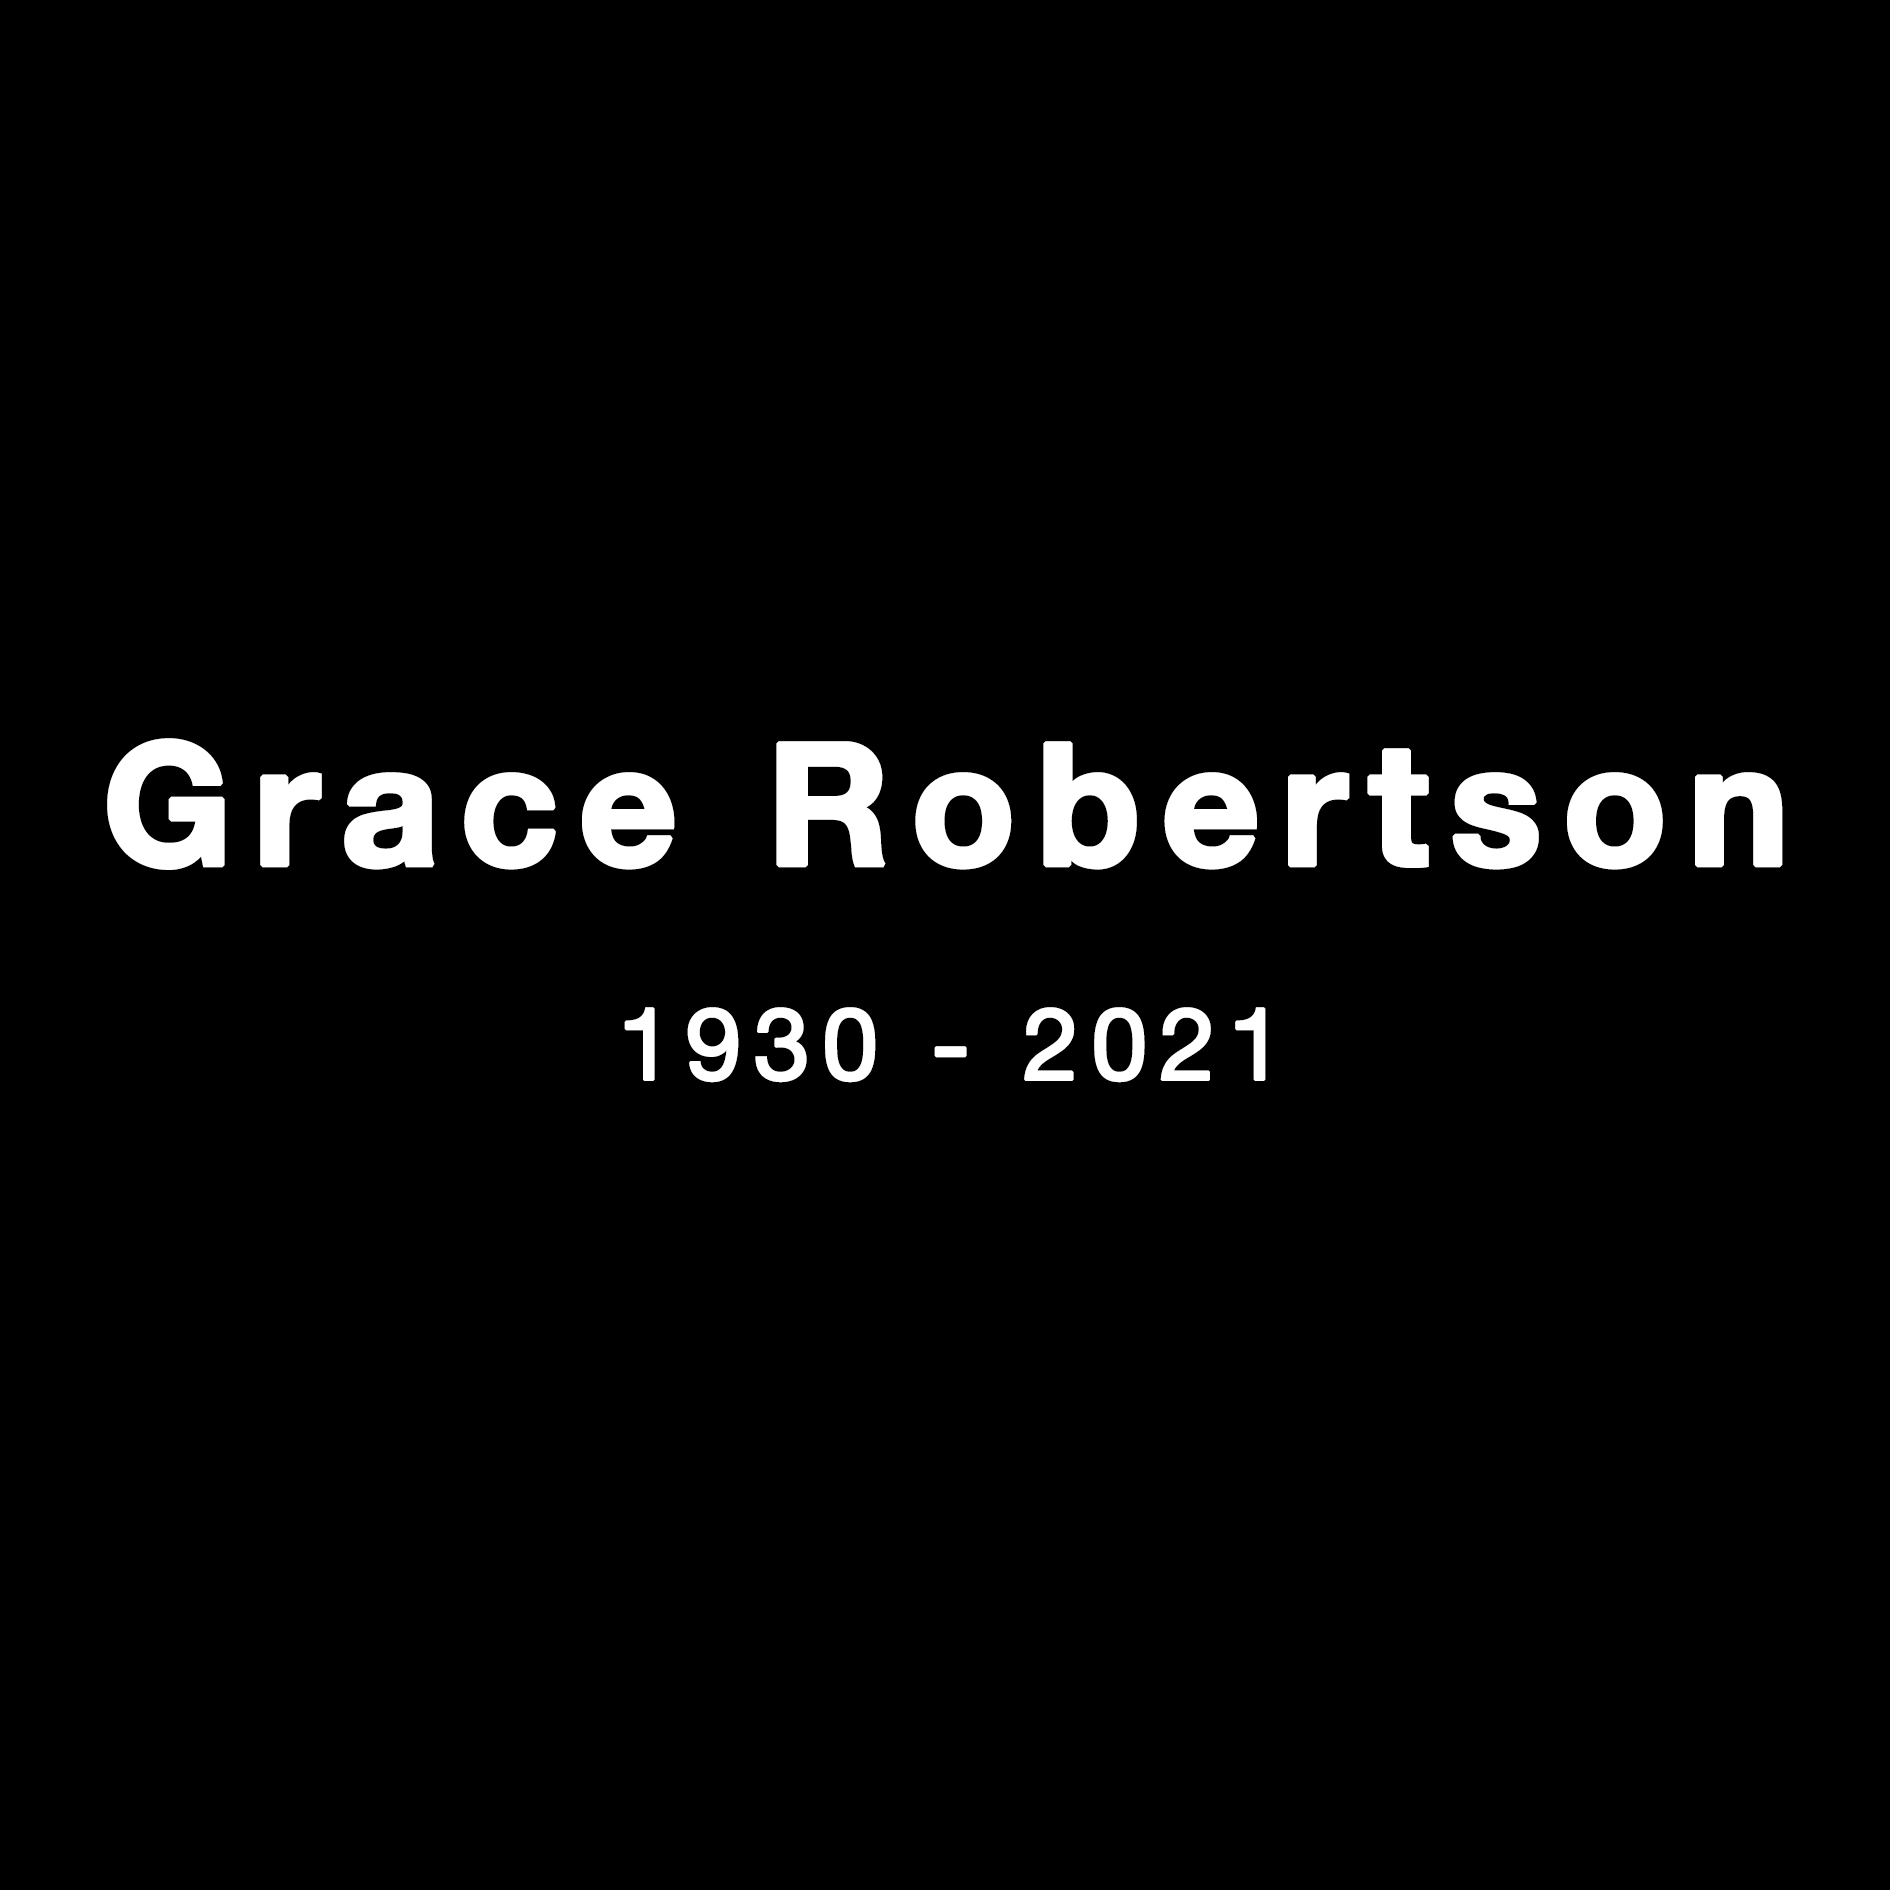 Grace Robertson - British Photographer - Hundred Heroines